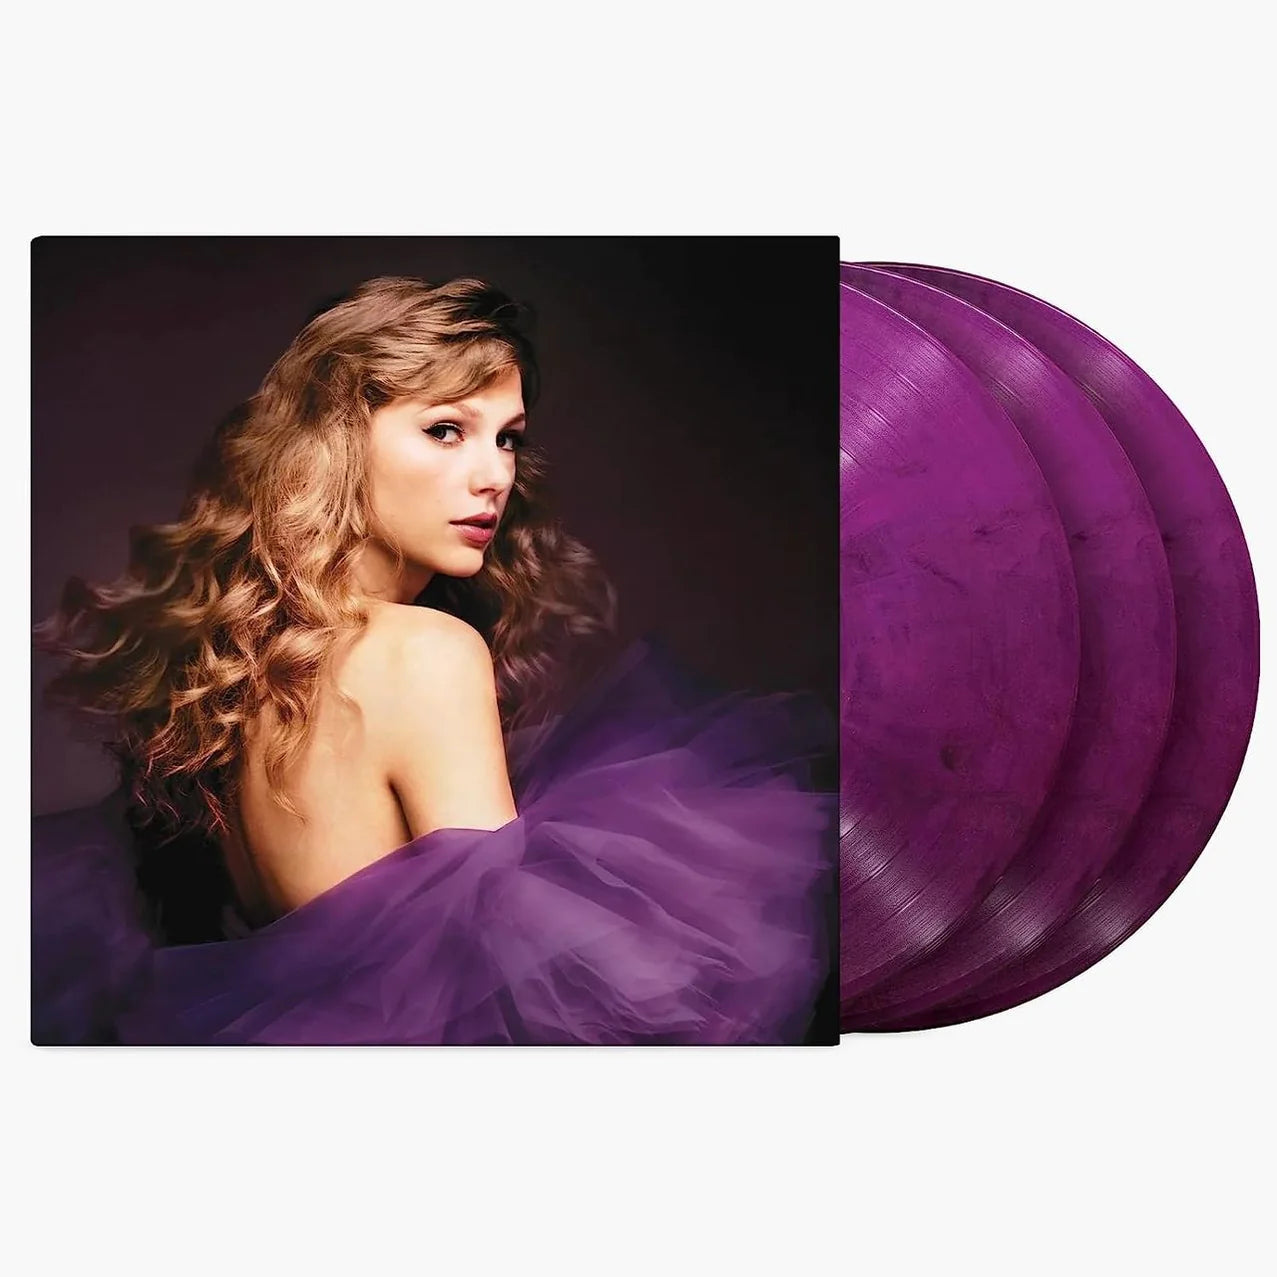 Taylor Swift - 1989 Taylor's Version Blue LP Vinyl